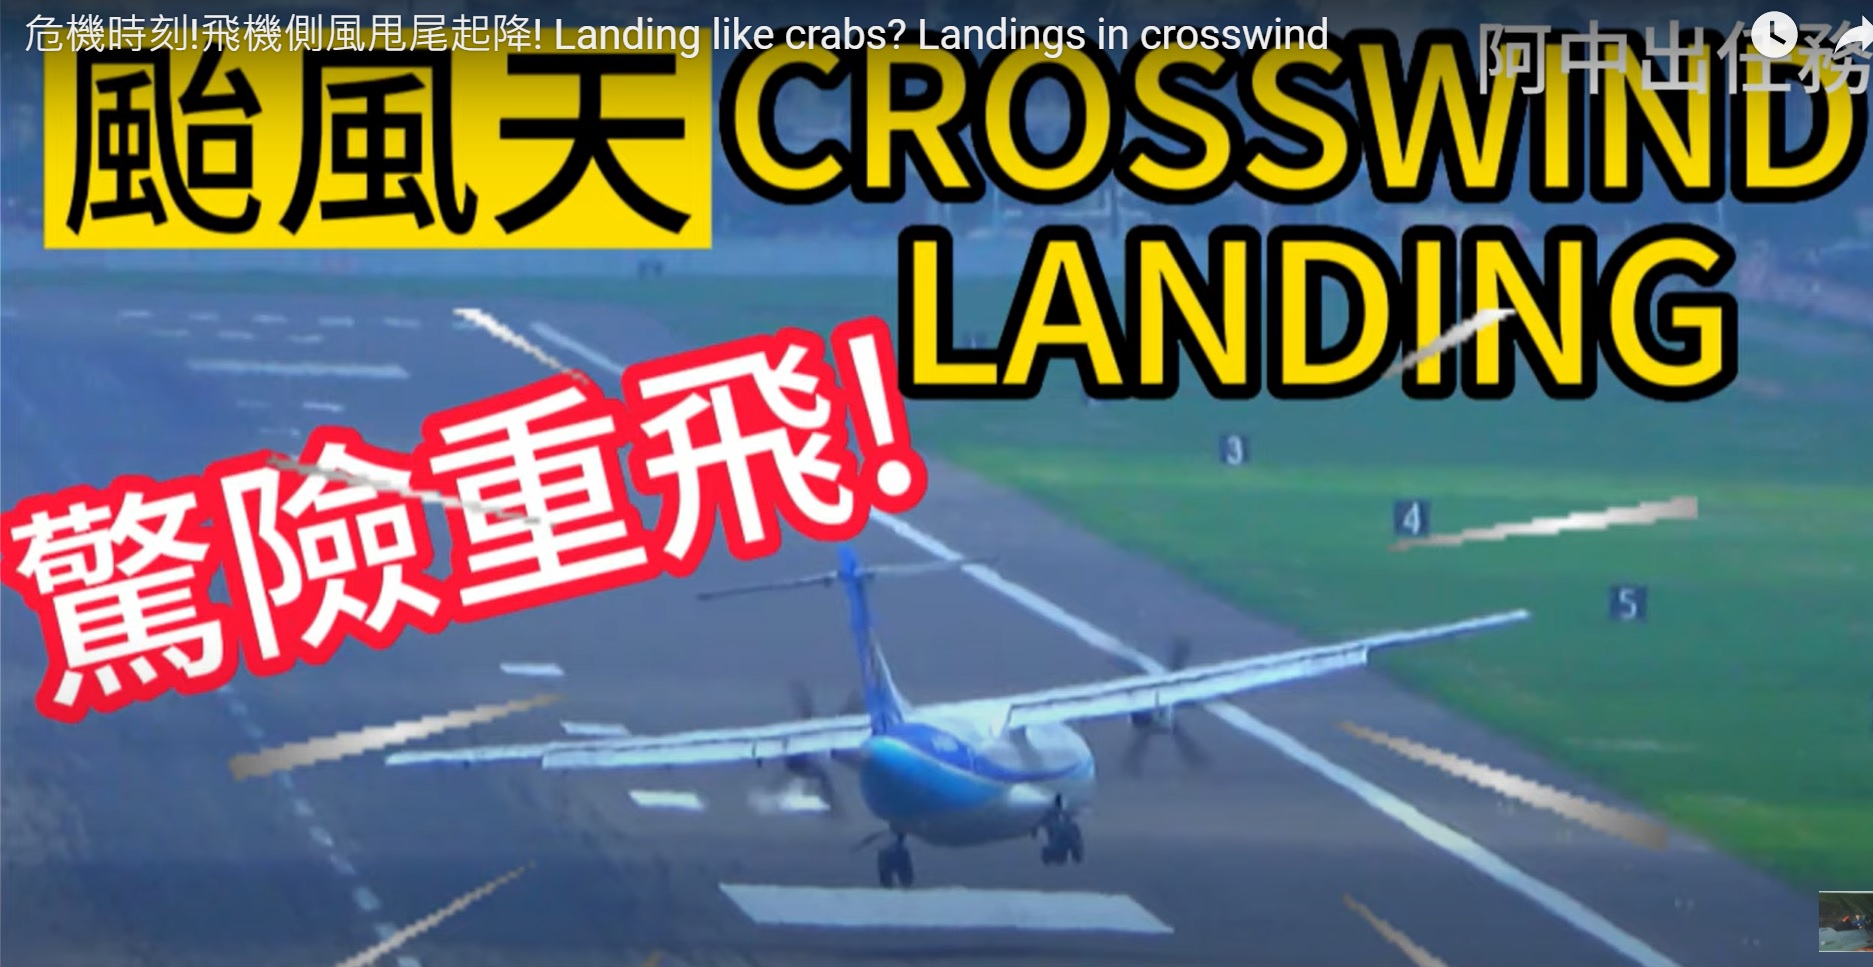 危機時刻!飛機側風甩尾起降! Landing like crabs? Landings in crosswind